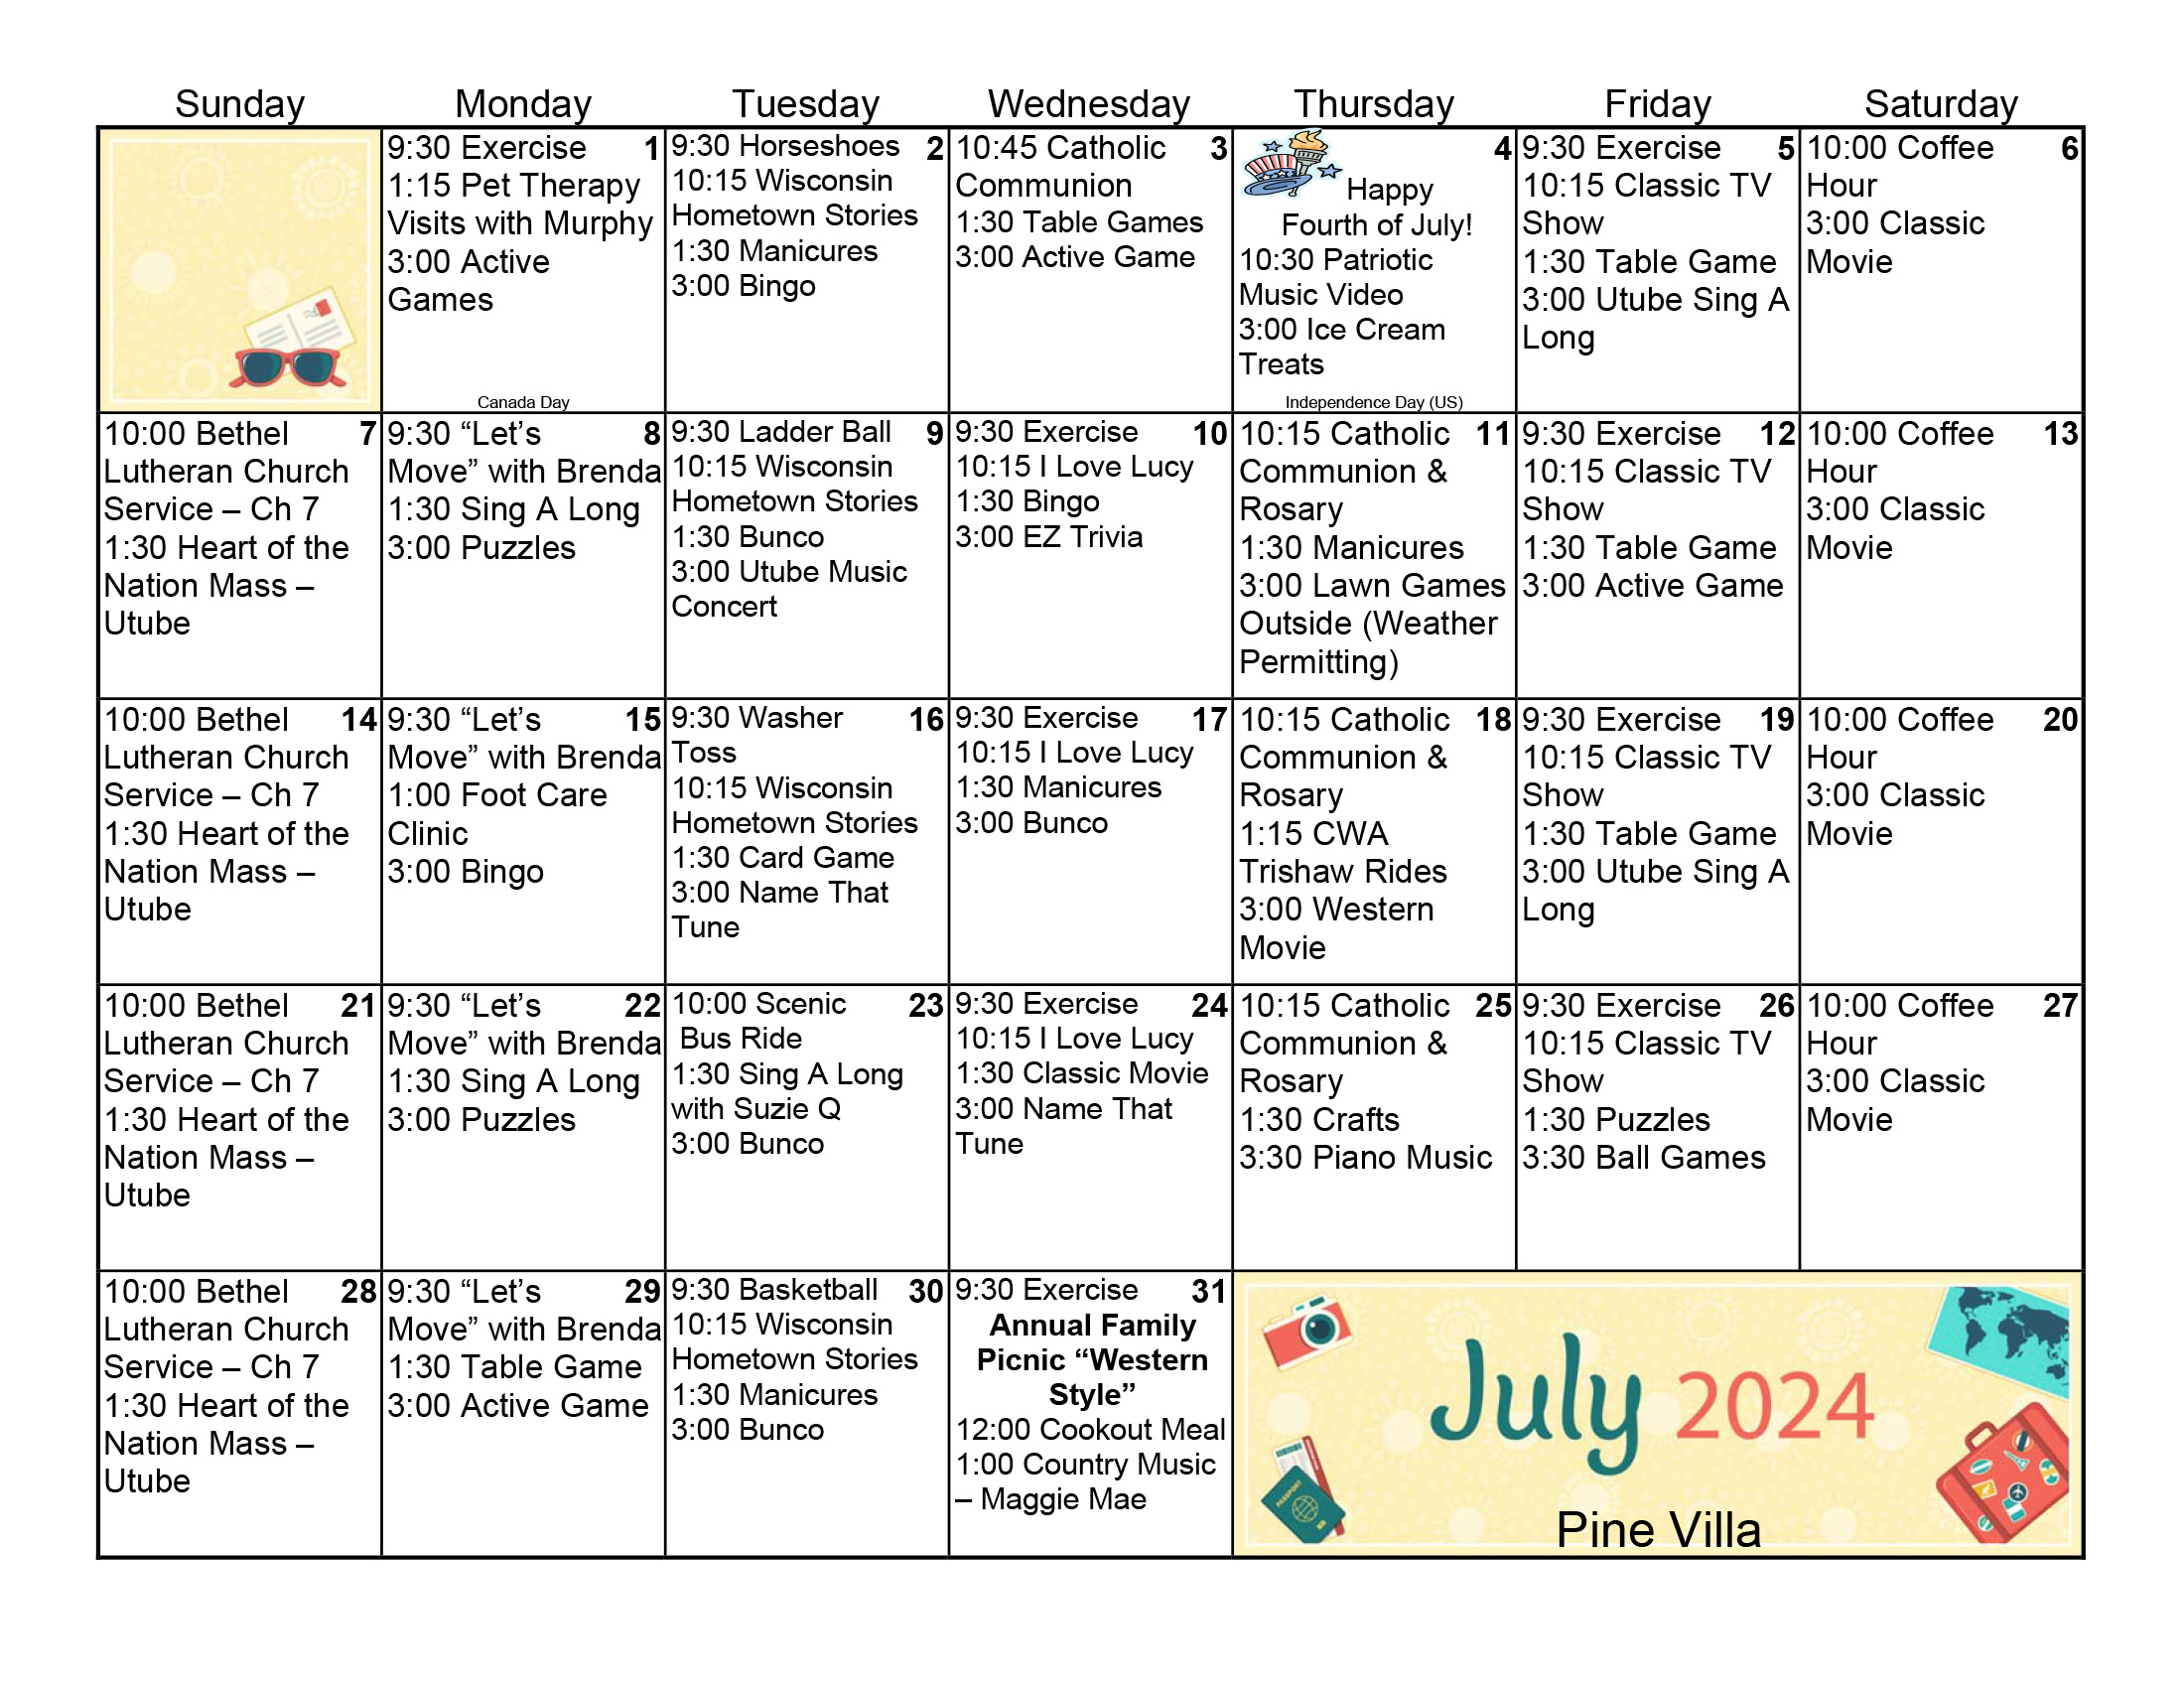 Pine Villa Memory Care July calendar